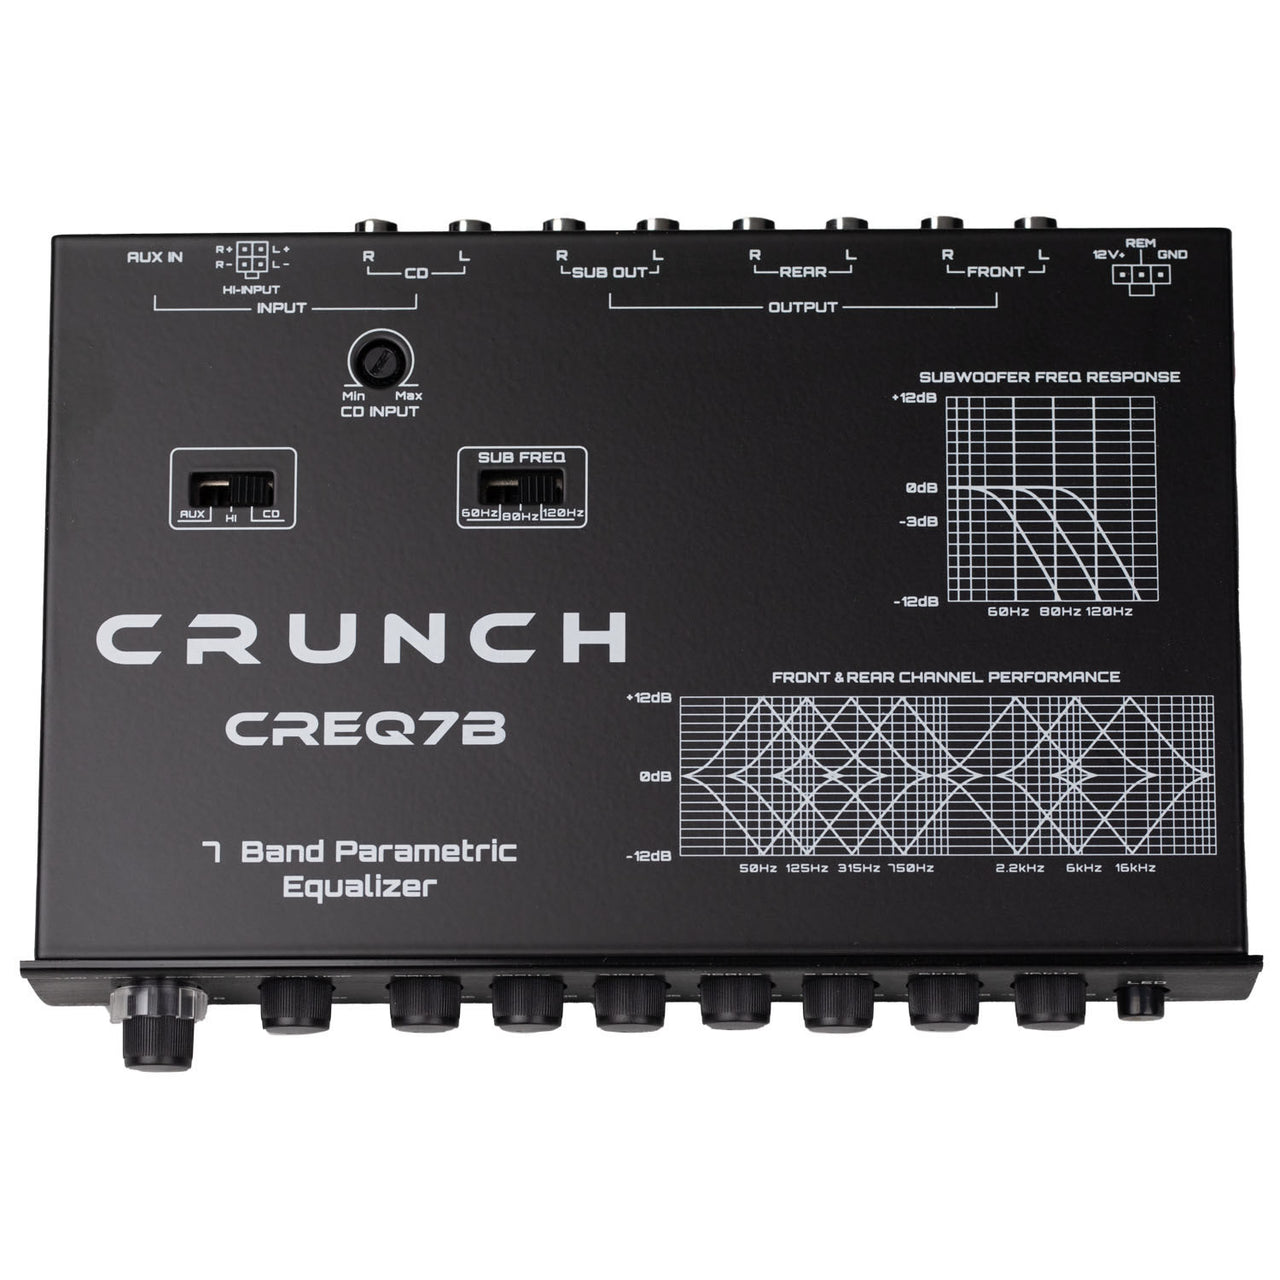 Crunch Ground Pounder CREQ7B  7-Band Parametric Equalizer.